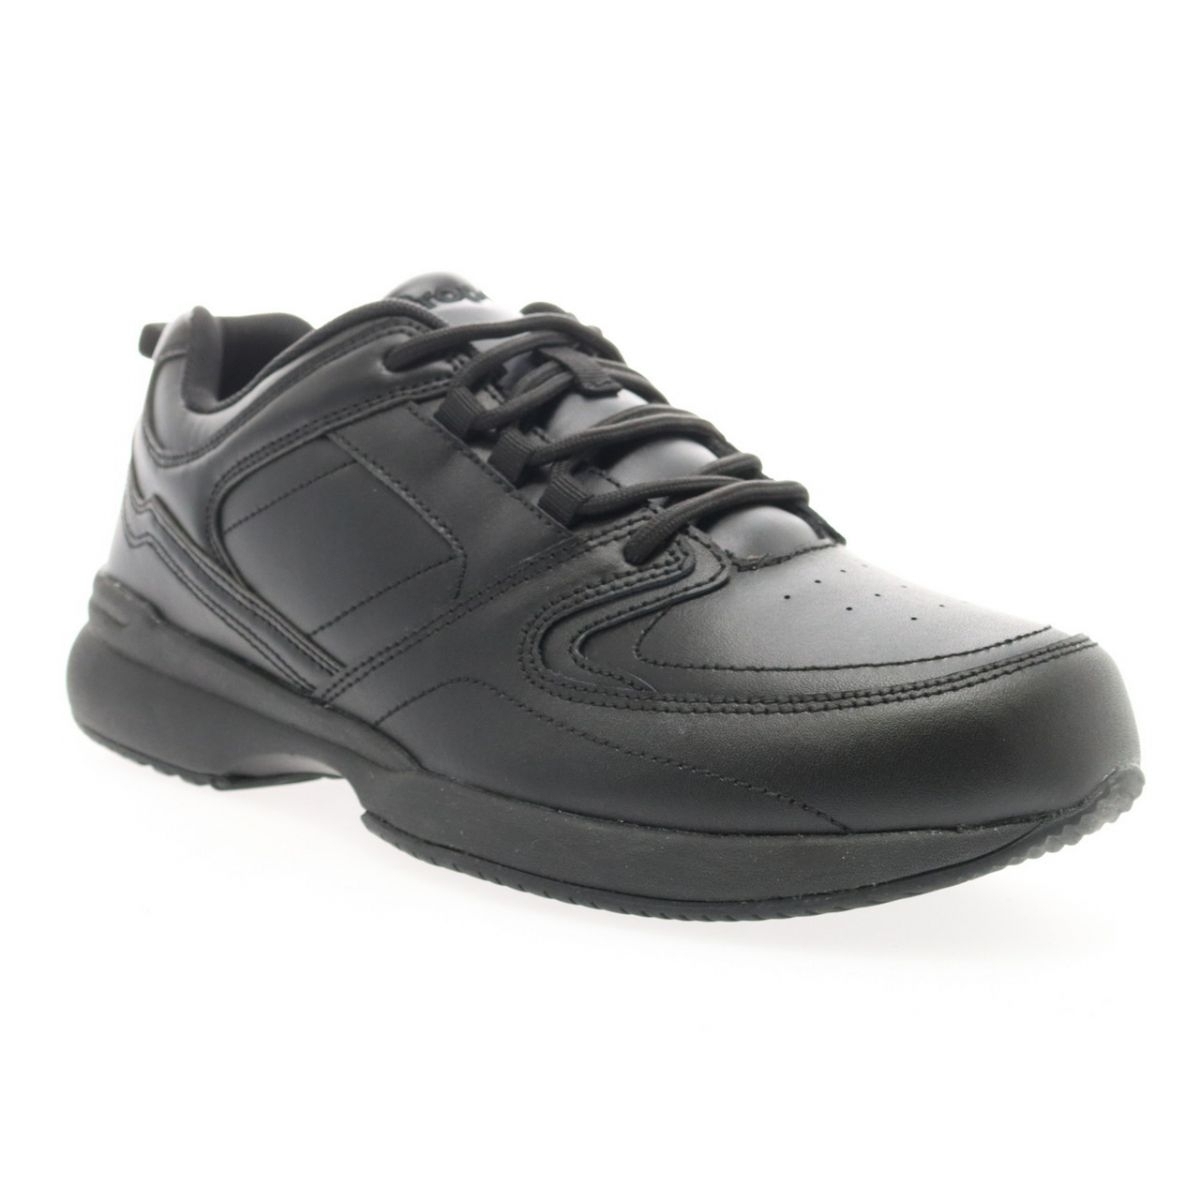 Propet Men's Life Walker Sport Sneaker Black - MAA272LBLK BLACK - BLACK, 13 WIDE